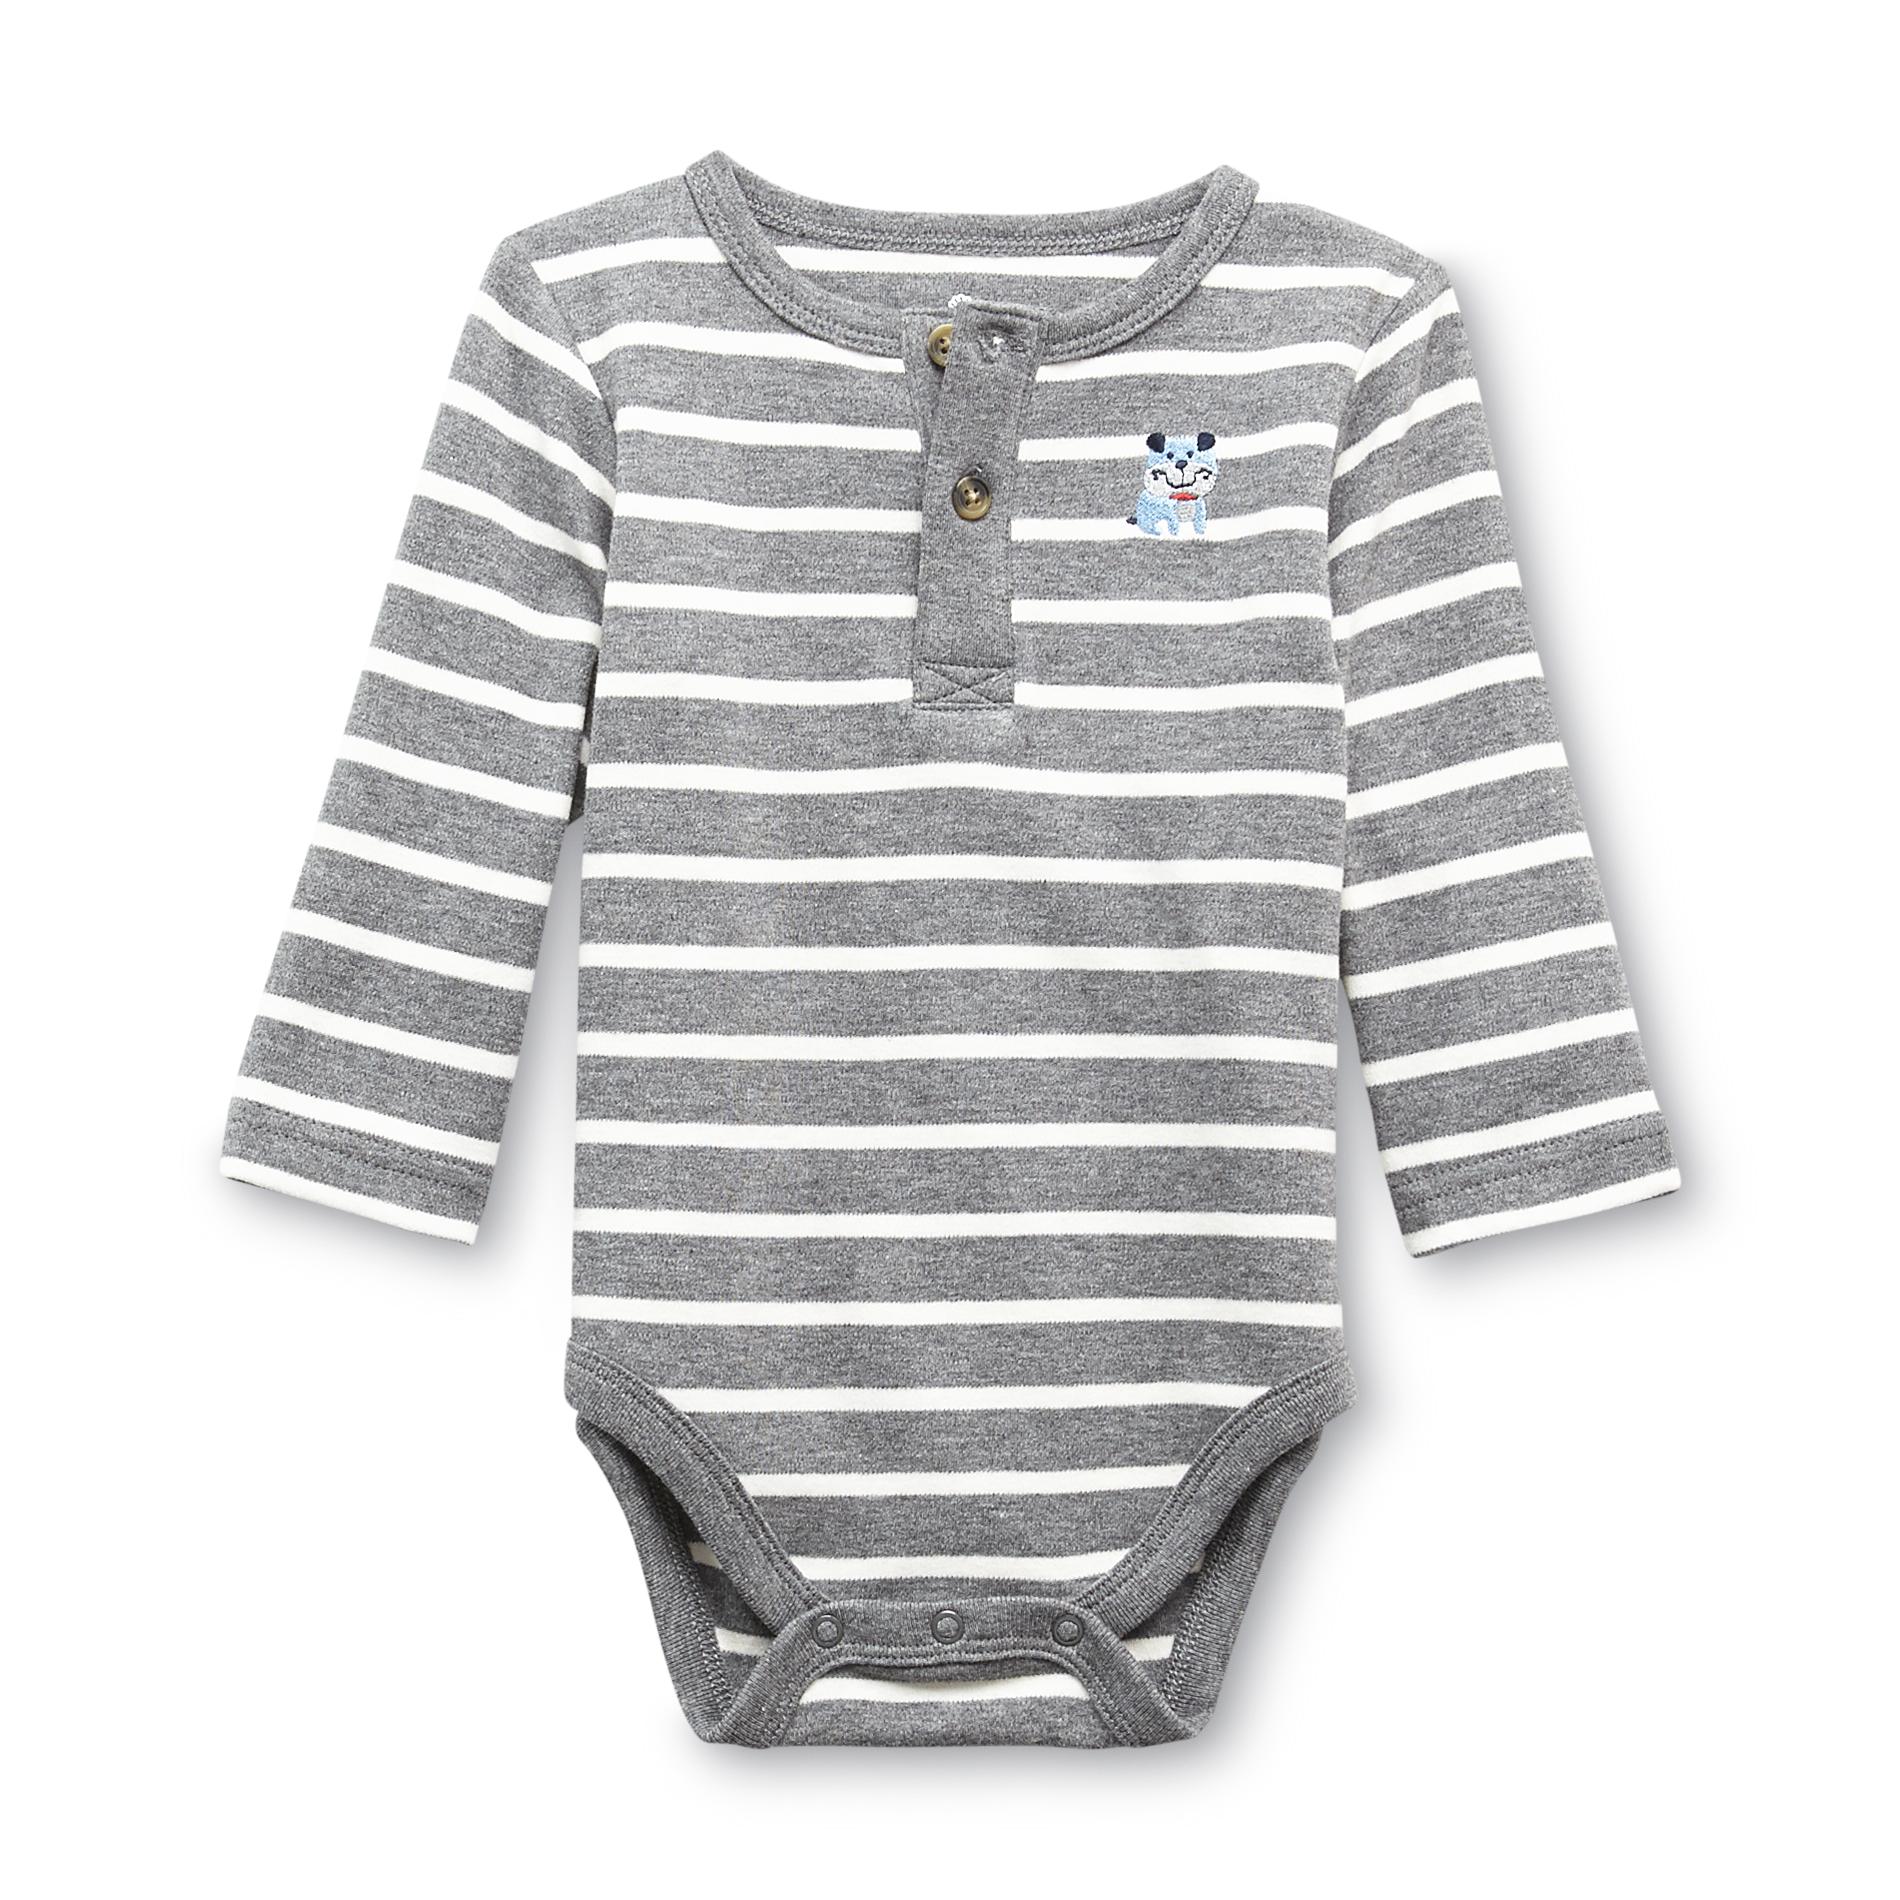 Small Wonders Newborn Boy's Bodysuit - Striped